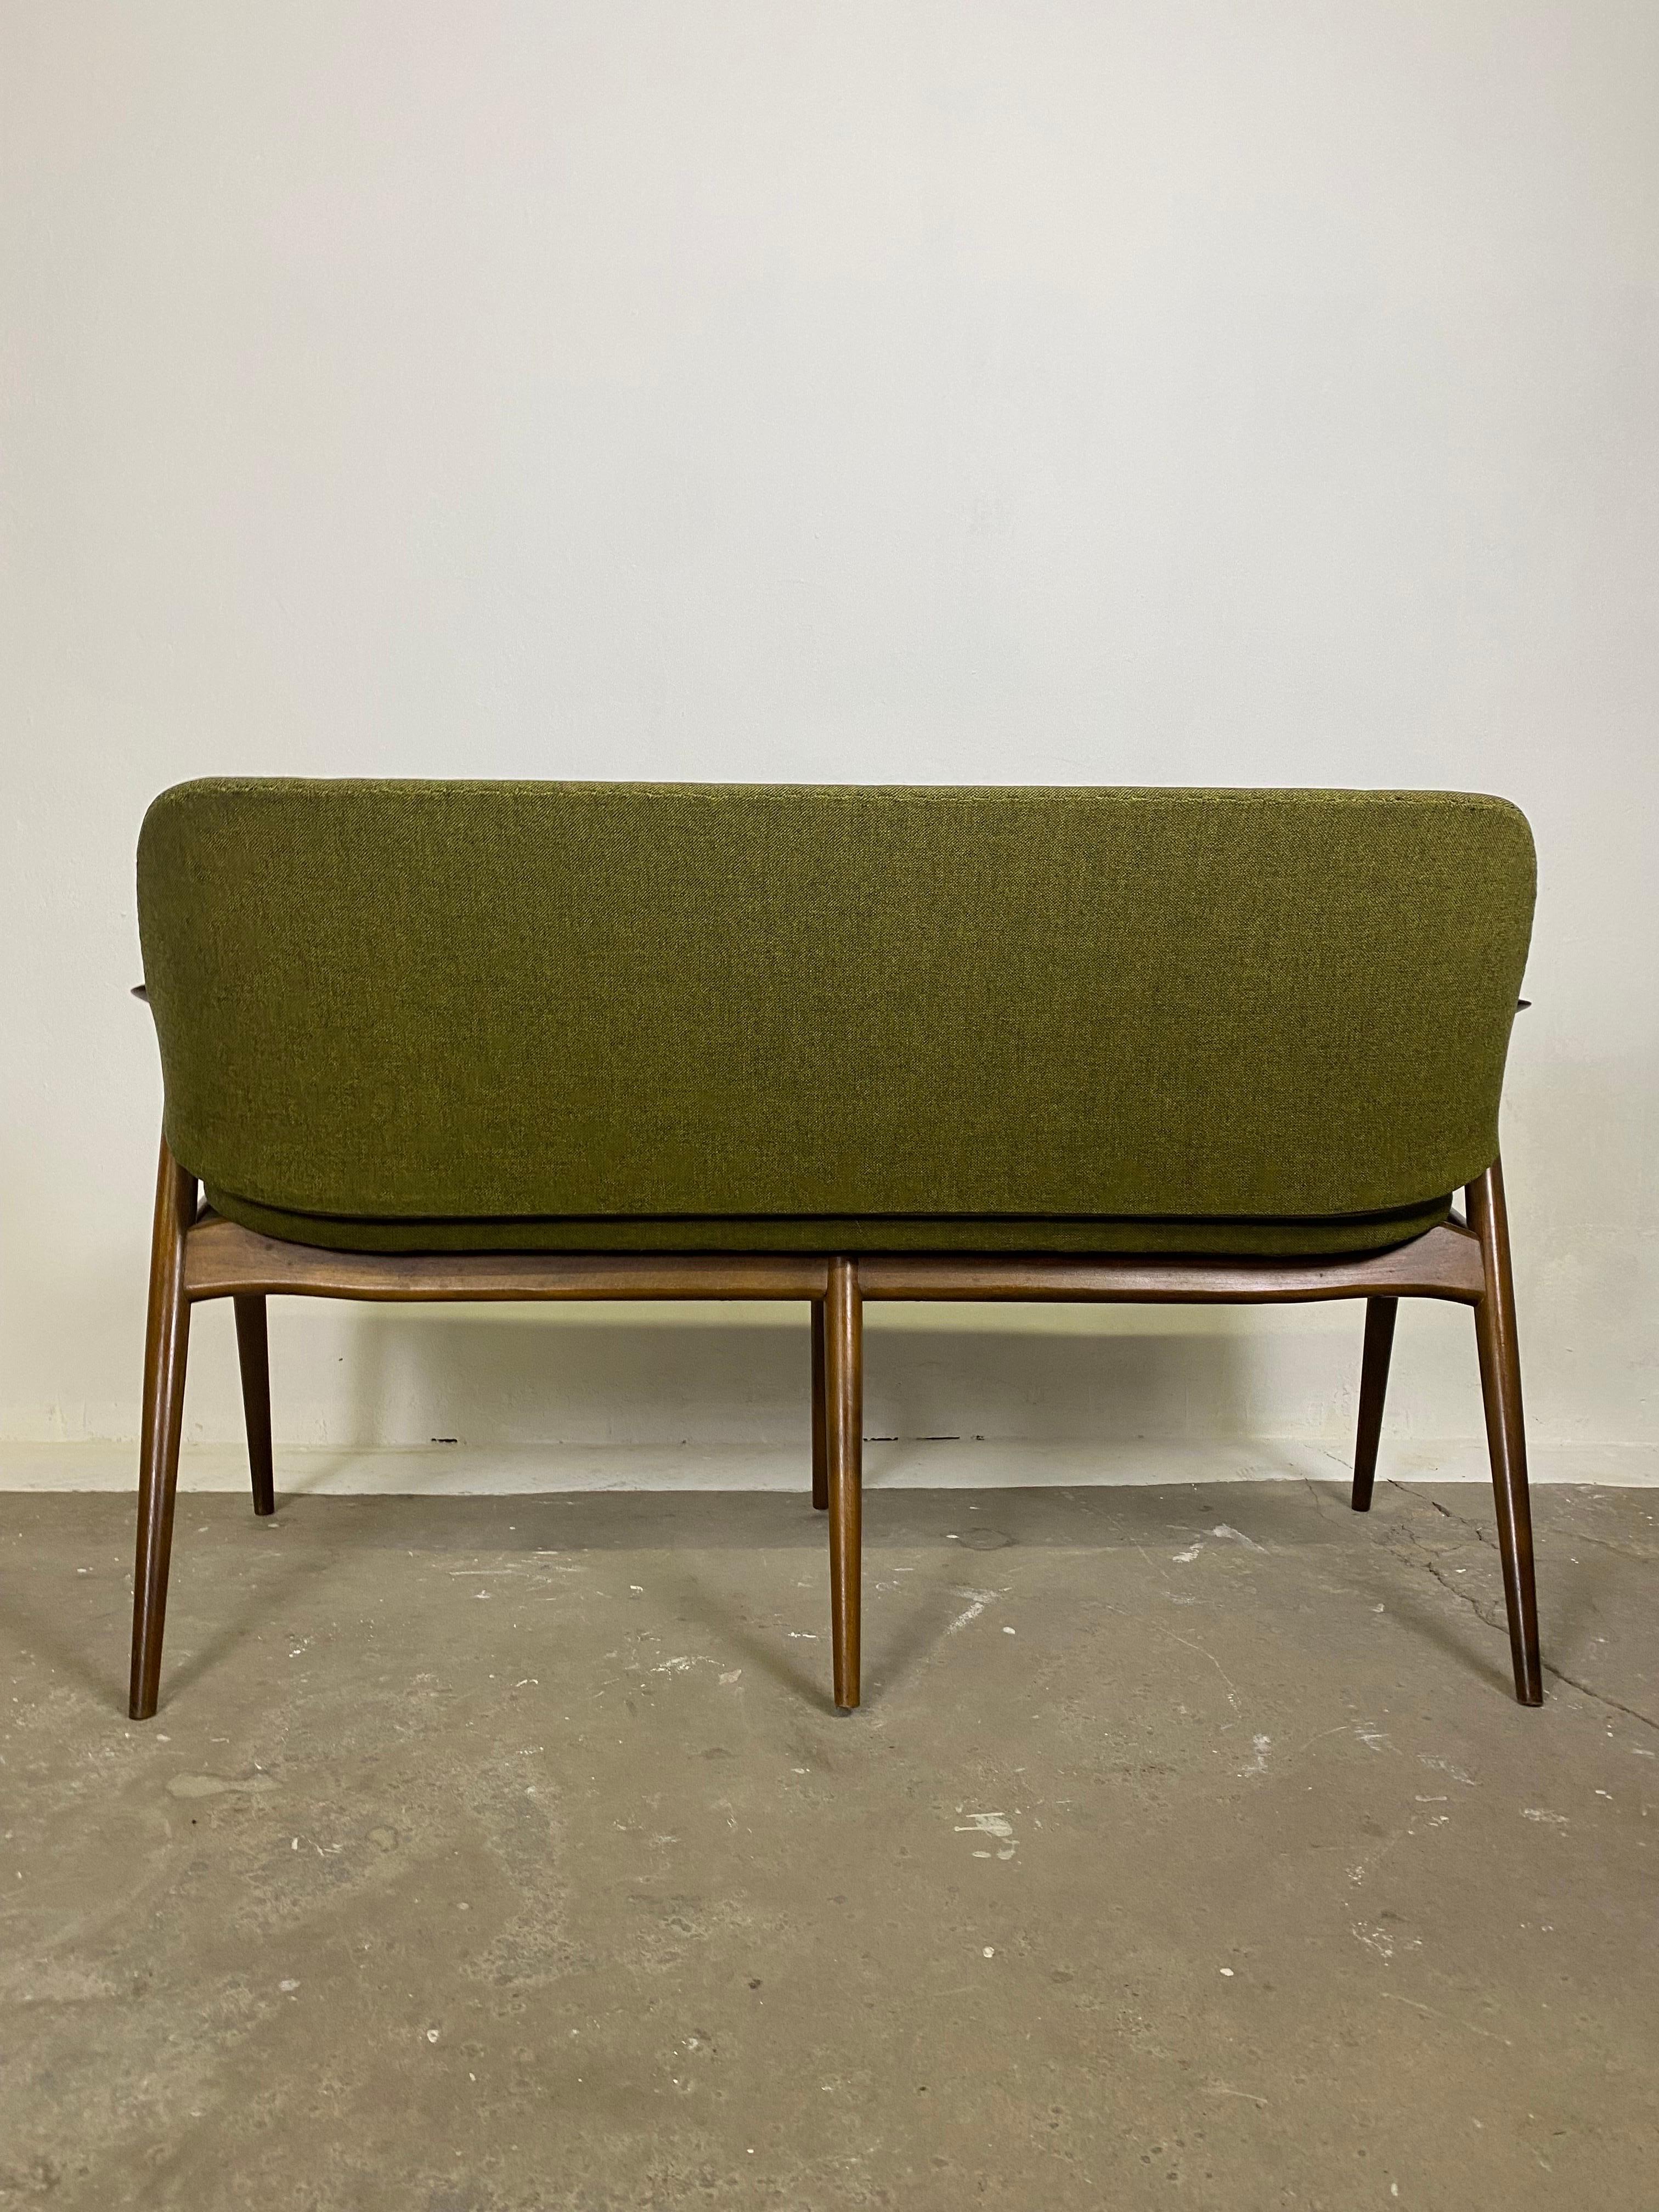 Midcentury Kontur Sofa Bench by Alf Svensson for Dux Sweden 1950s For Sale 2